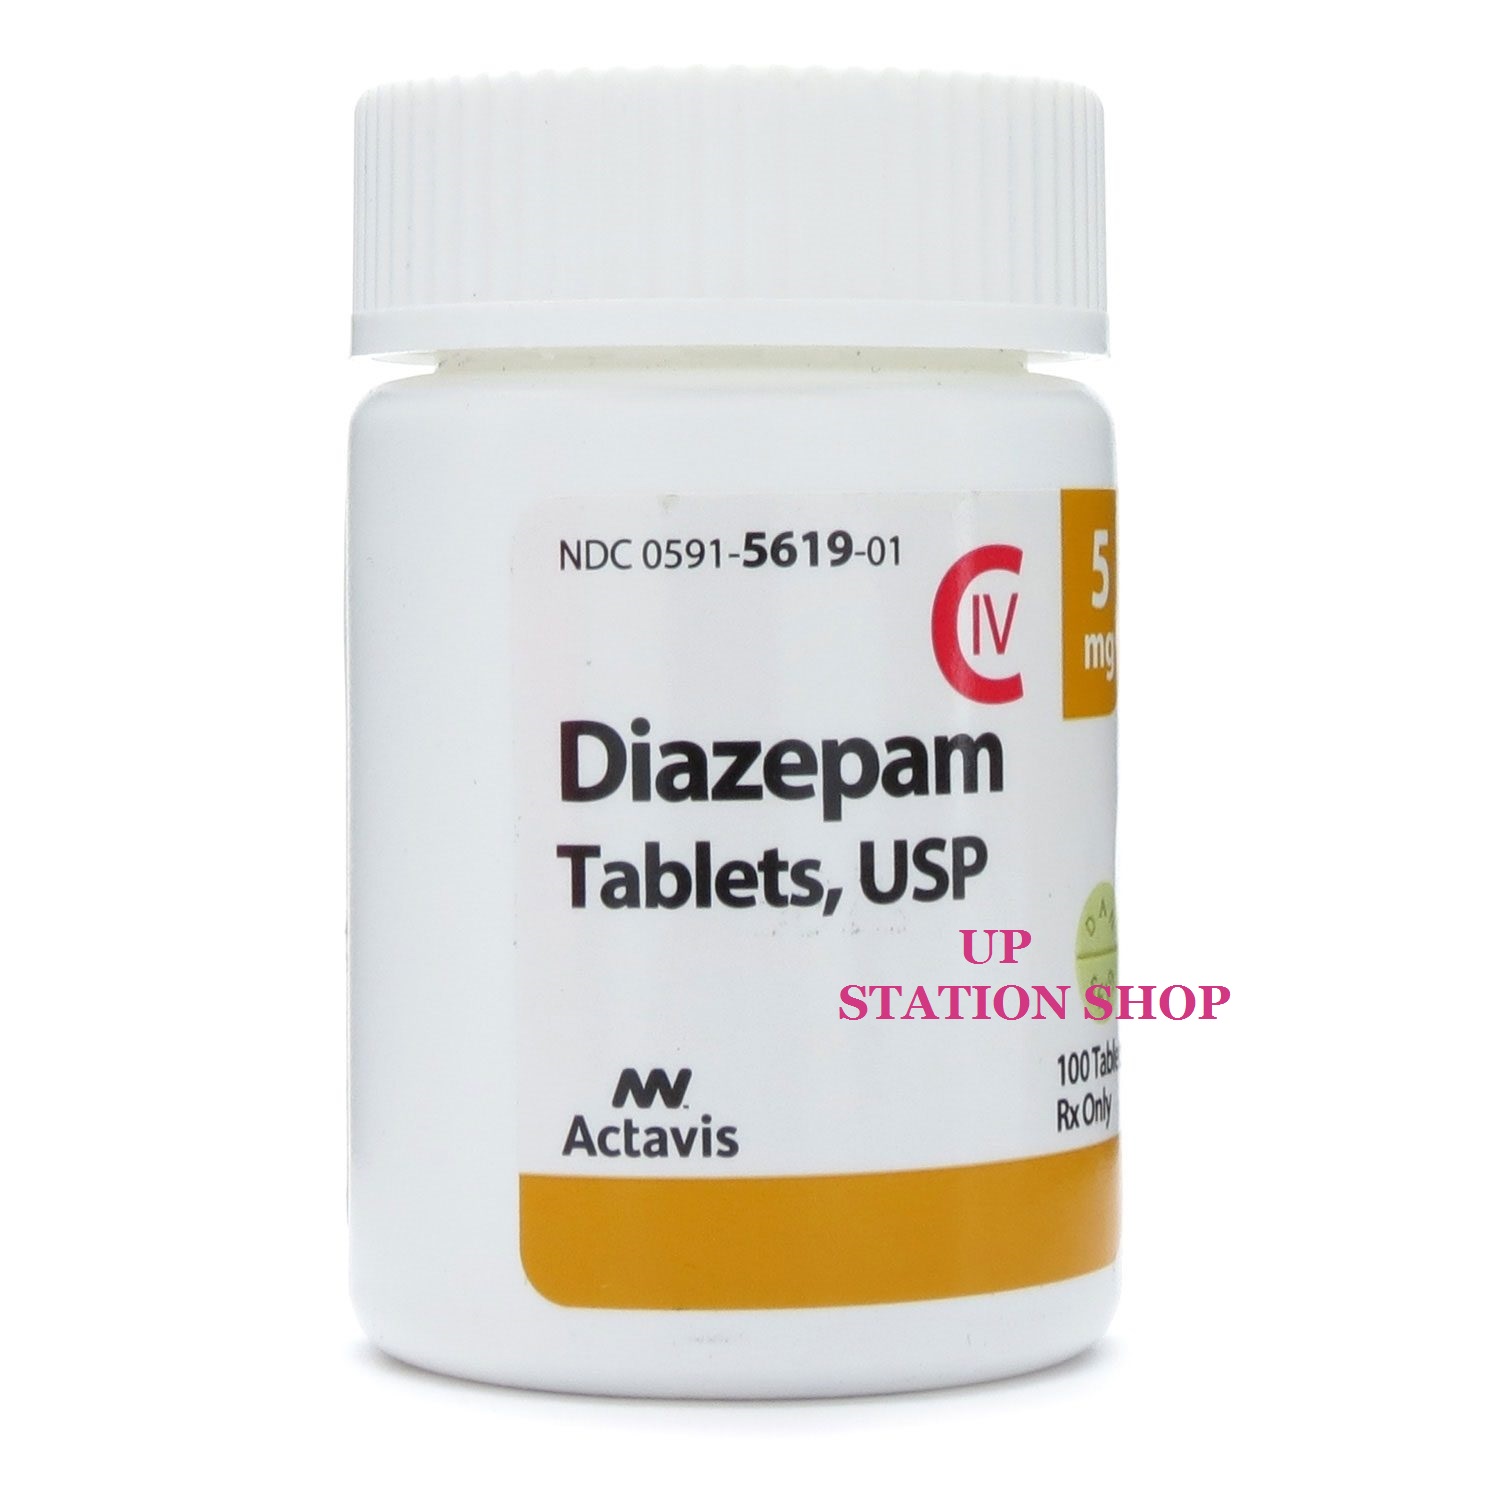 5mg of diazepam